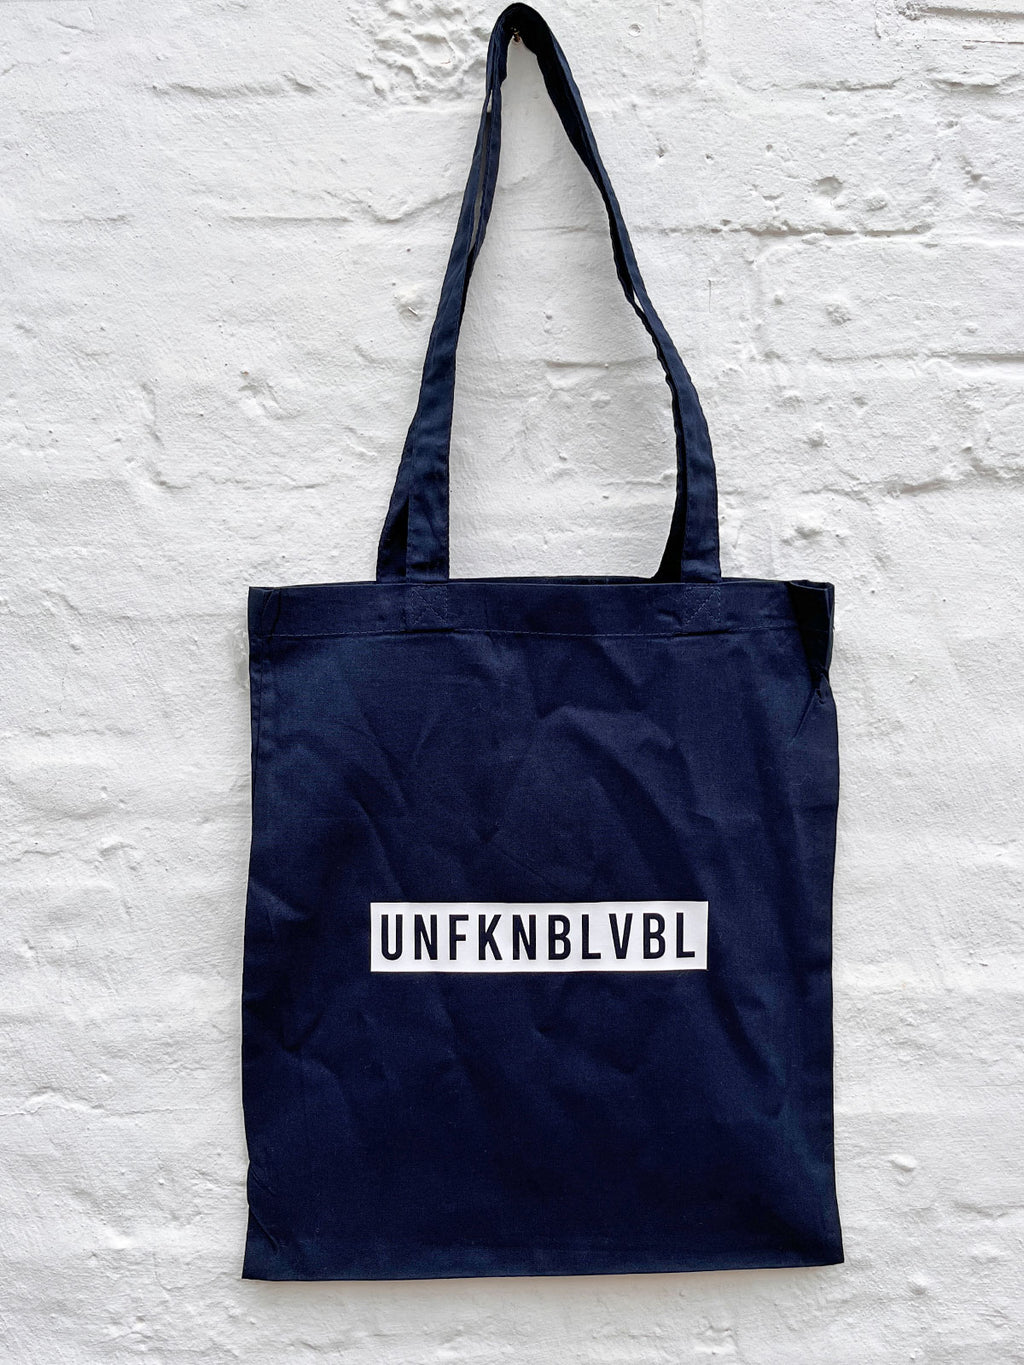 UNFCKBLVBL - Tote Bag - Navy